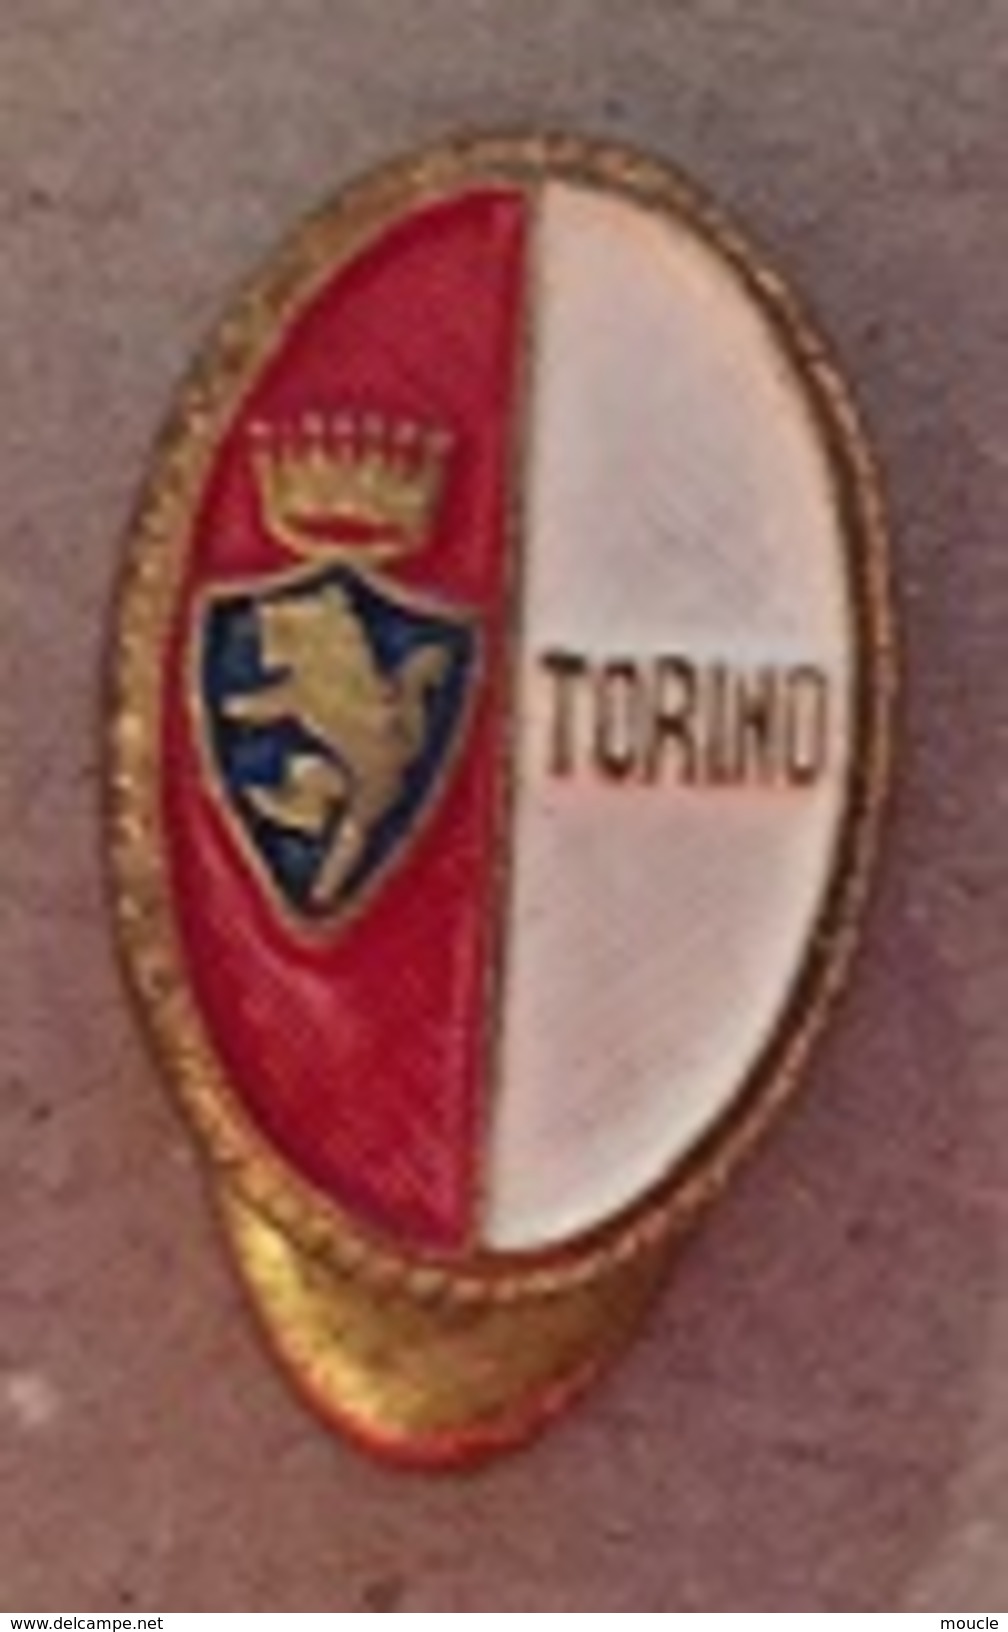 BOUTONNIERE - FOOTBALL - FOOT - SOCCER - FUTBOL - CACIO - TORINO - TURIN - ITALIA - ITALIE - TORO - TAUREAU - Calcio